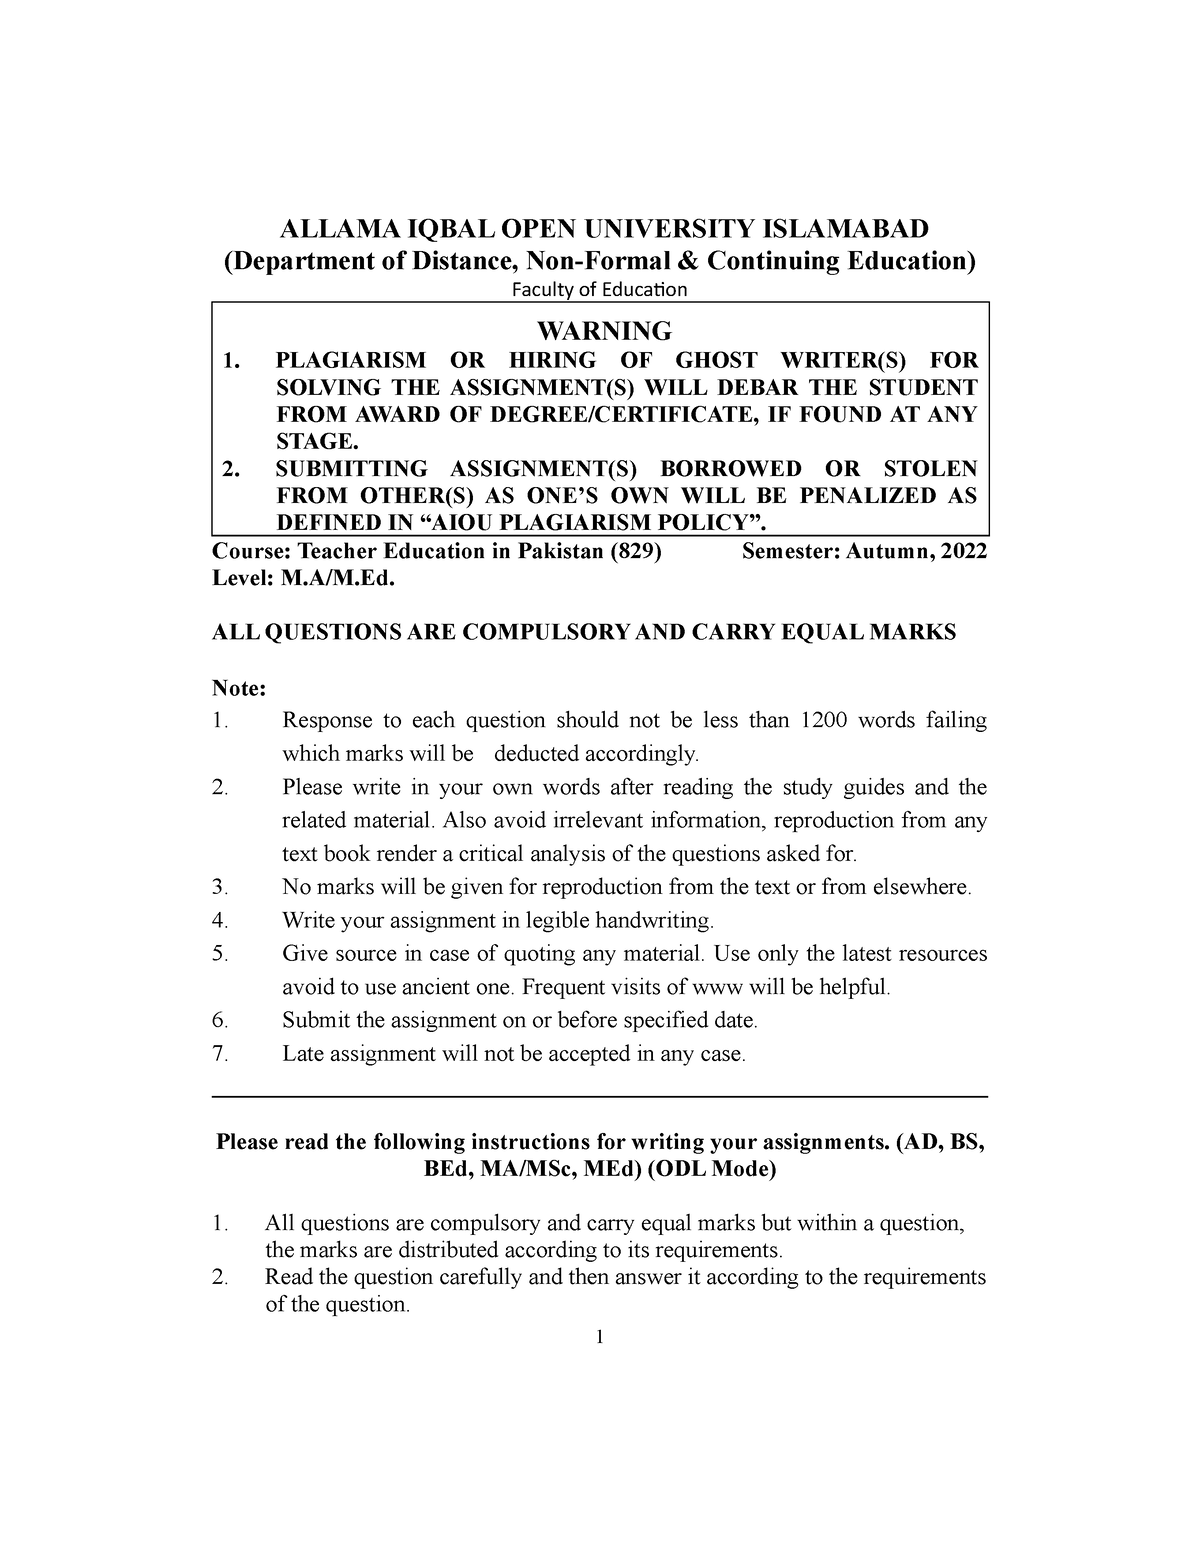 allama iqbal open university solved assignment code 1431